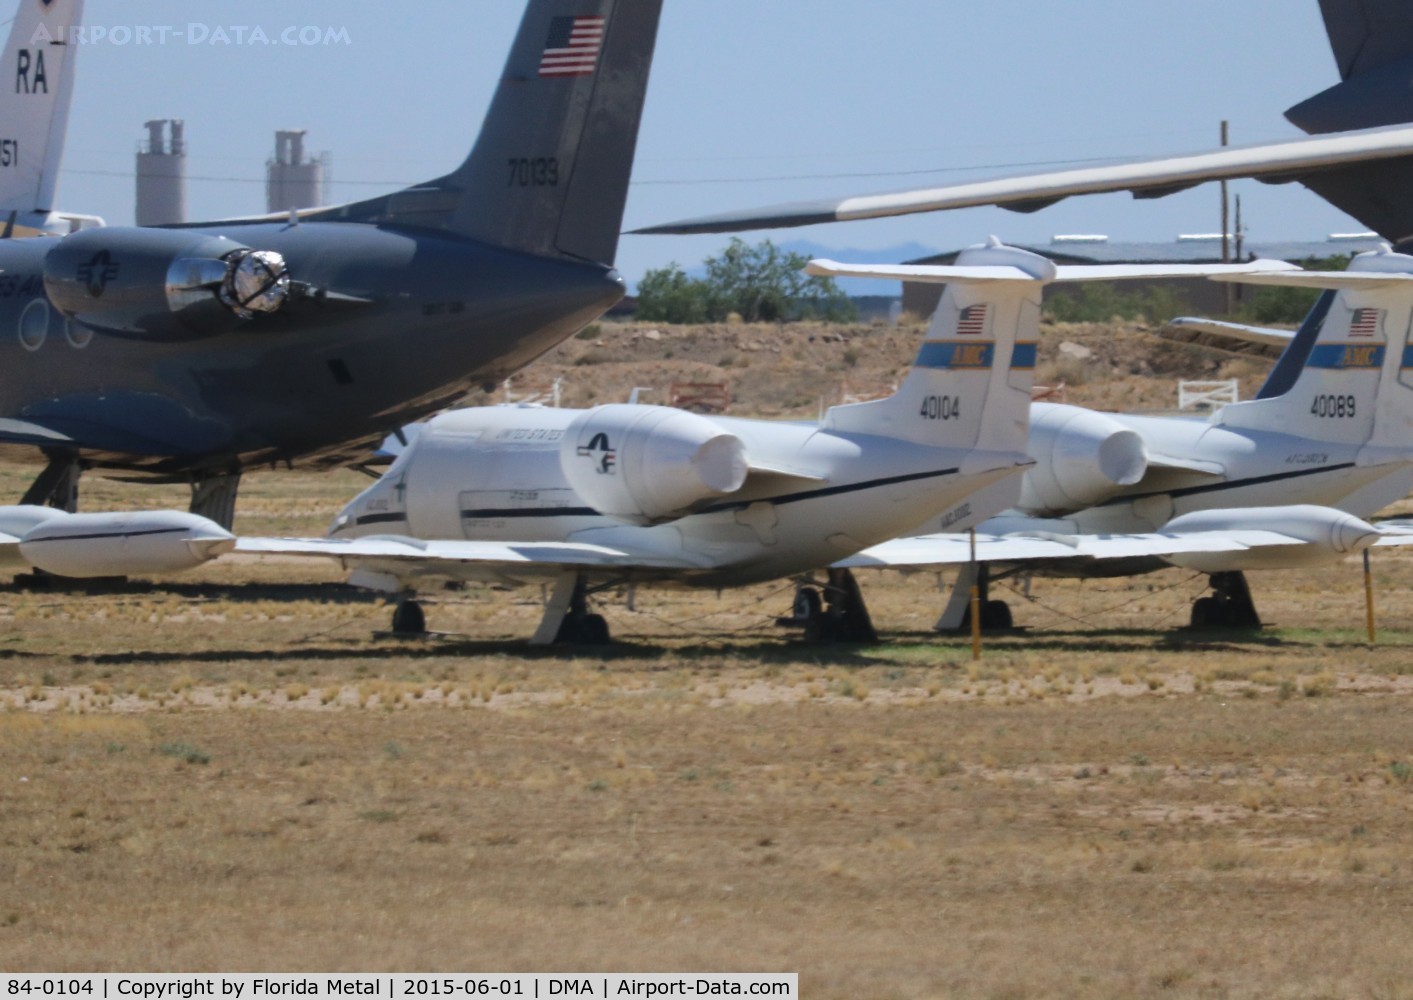 84-0104, 1984 Gates Learjet C-21A C/N 35A-550, C-21A